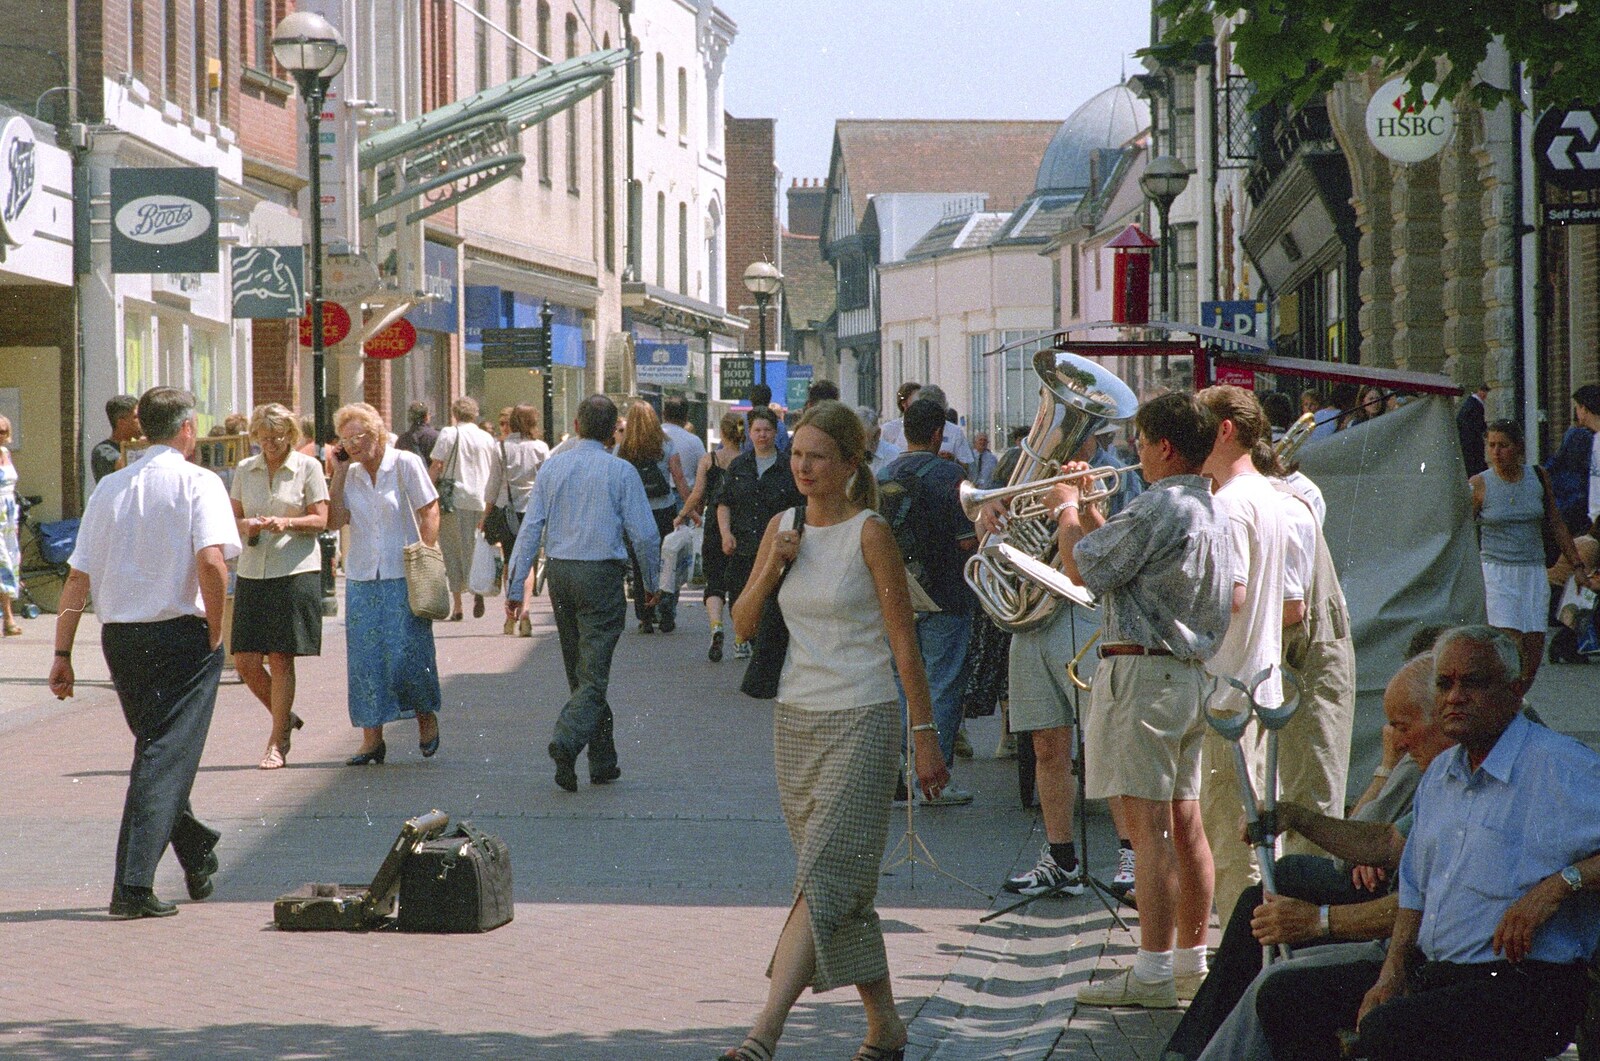 Nosher's Last Day at CISU/SCC, Suffolk County Council, Ipswich - 22nd June 2000: Street life on Tavern Street